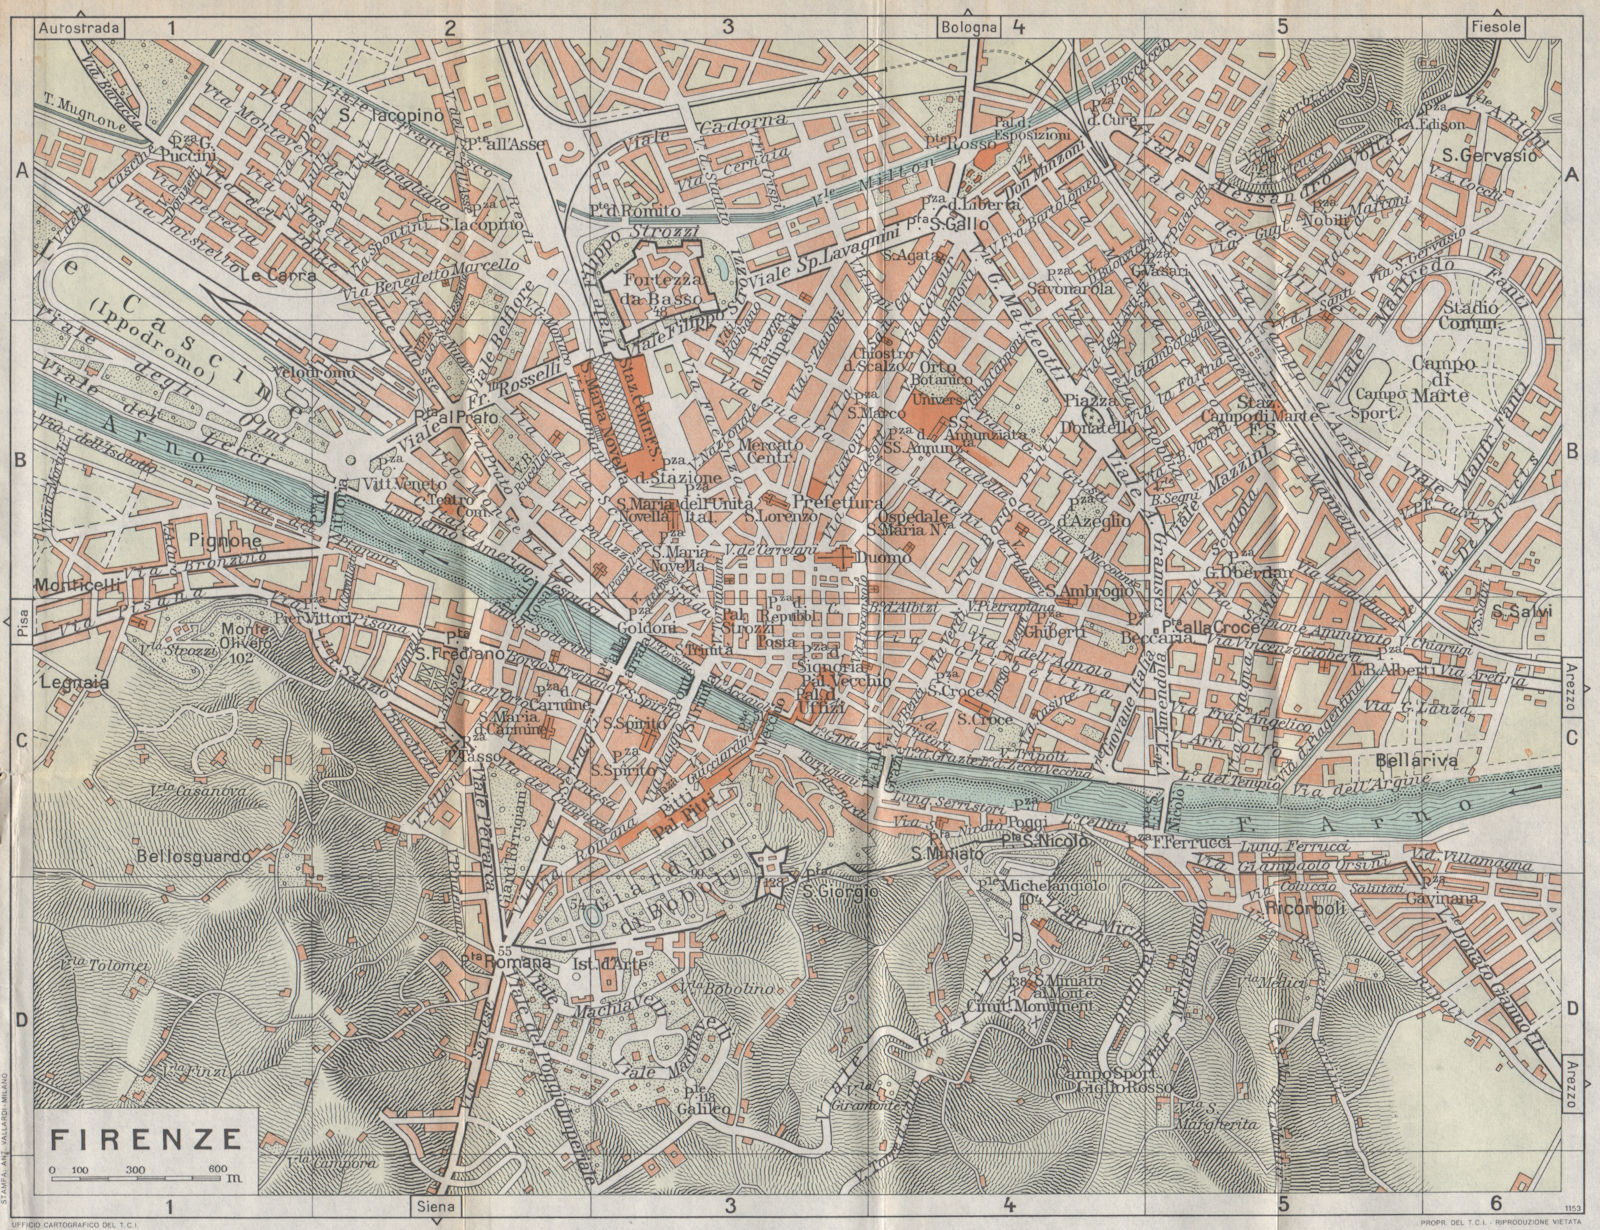 Associate Product FLORENCE FIRENZE vintage town city map plan pianta della città. Italy 1958